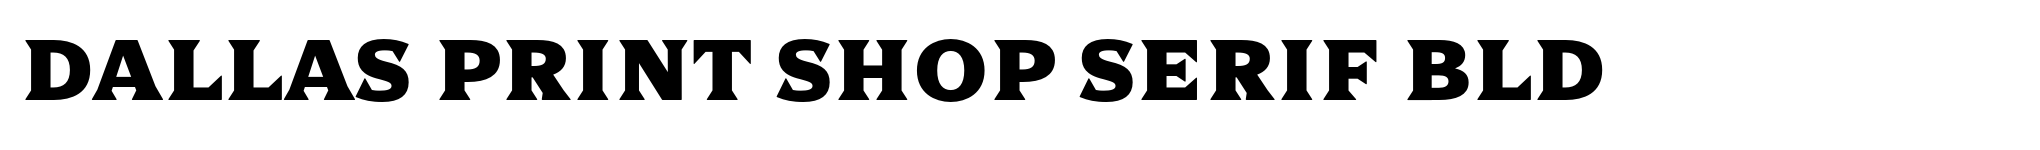 Dallas Print Shop Serif Bld image